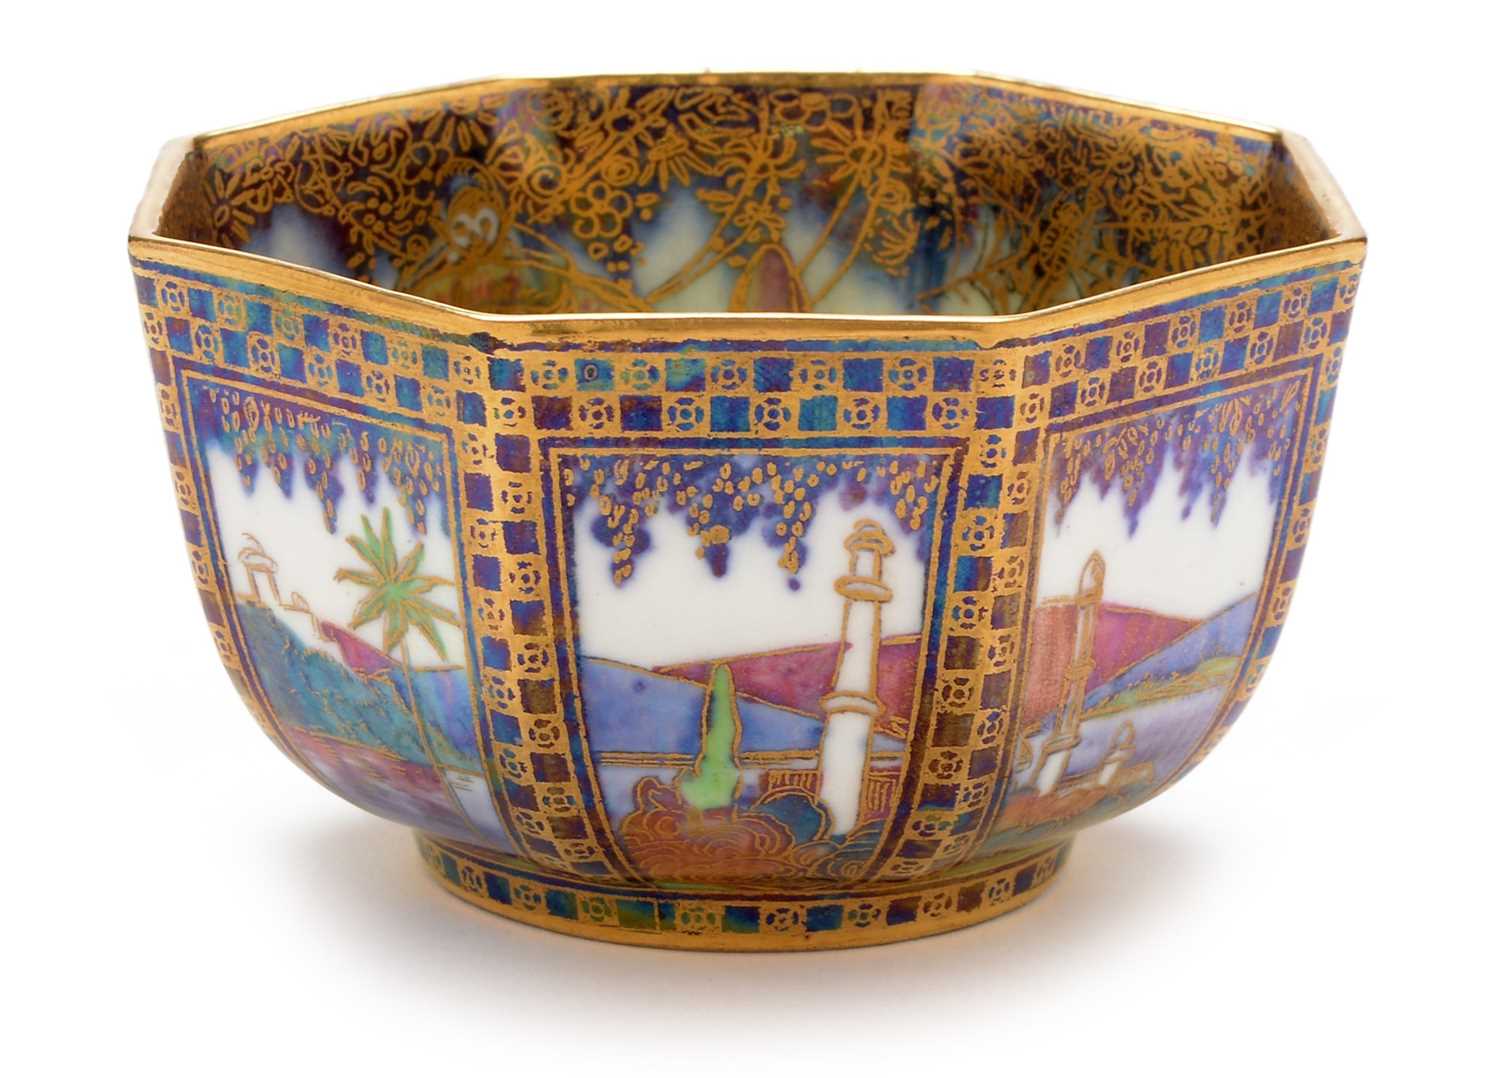 Lot 468 - Wedgwood fairyland lustre bowl